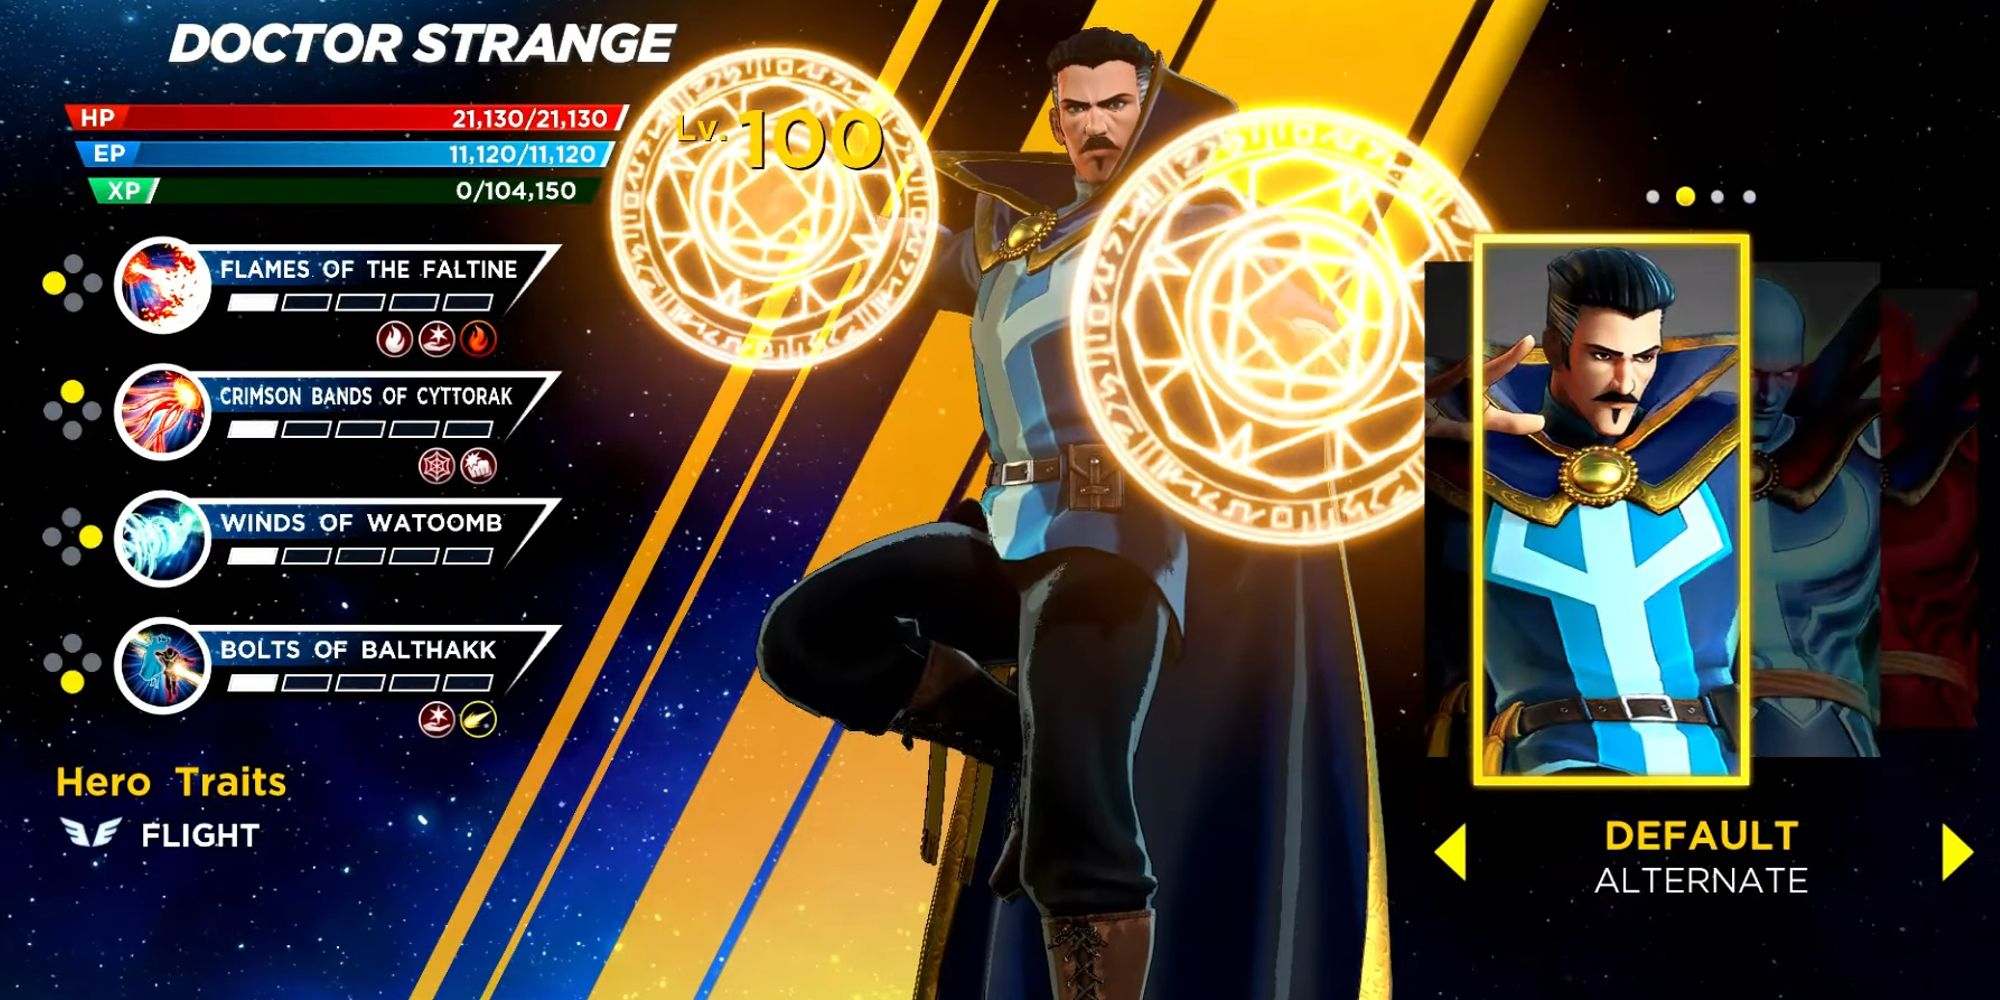 Doctor Strange profile screen in Marvel Ultimate Alliance 3 The Black Order